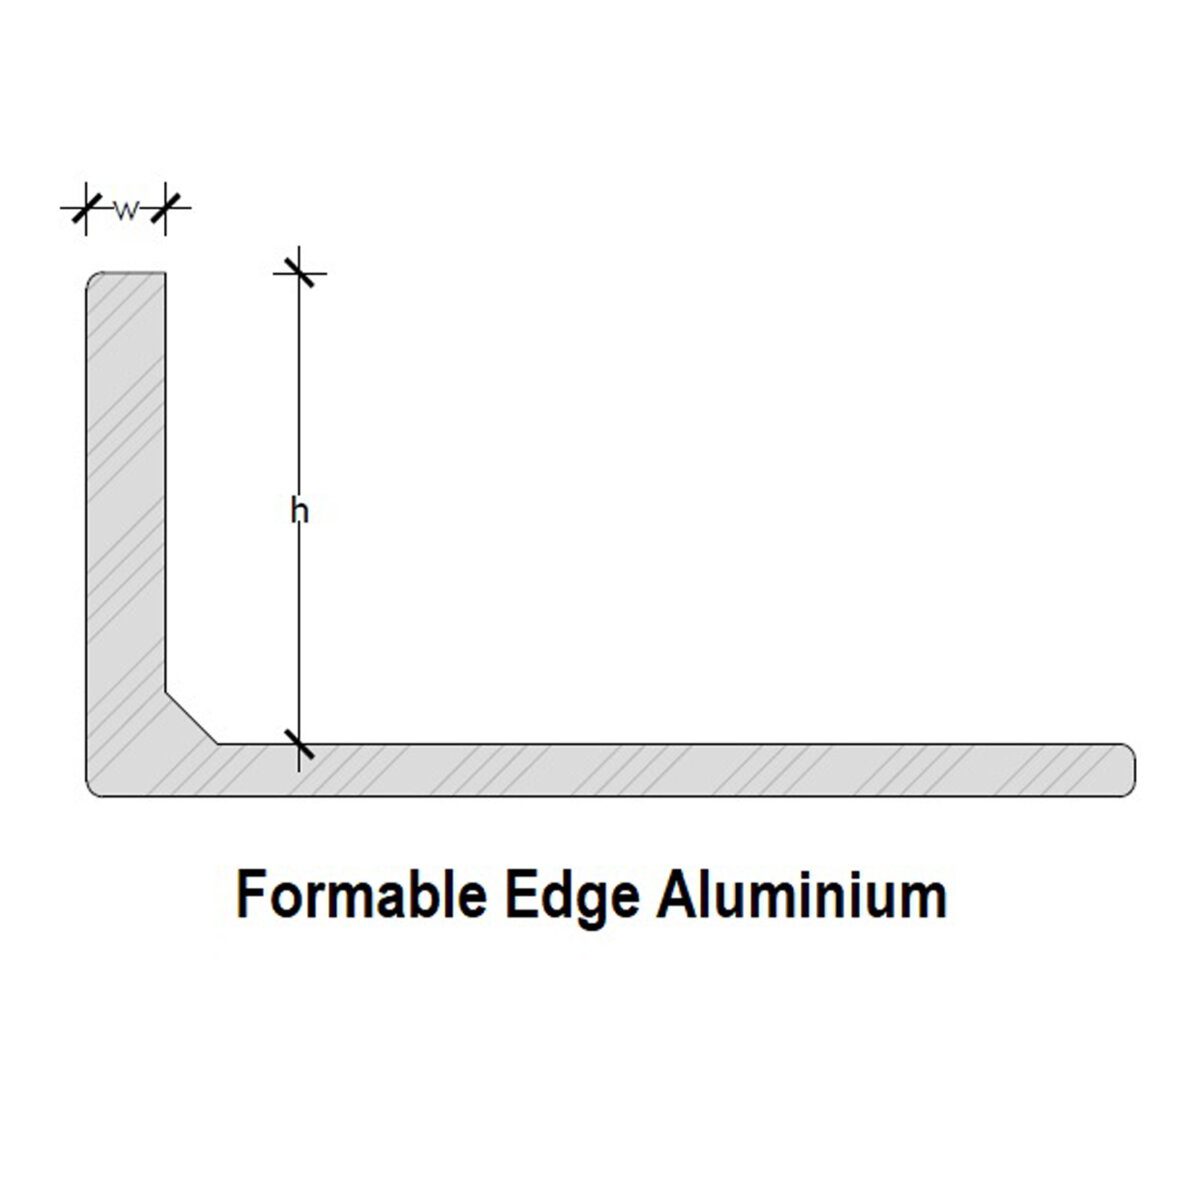 3 Sure Strip Formable Edge Aluminium 10mm_Stiles_TechDrawing_Image